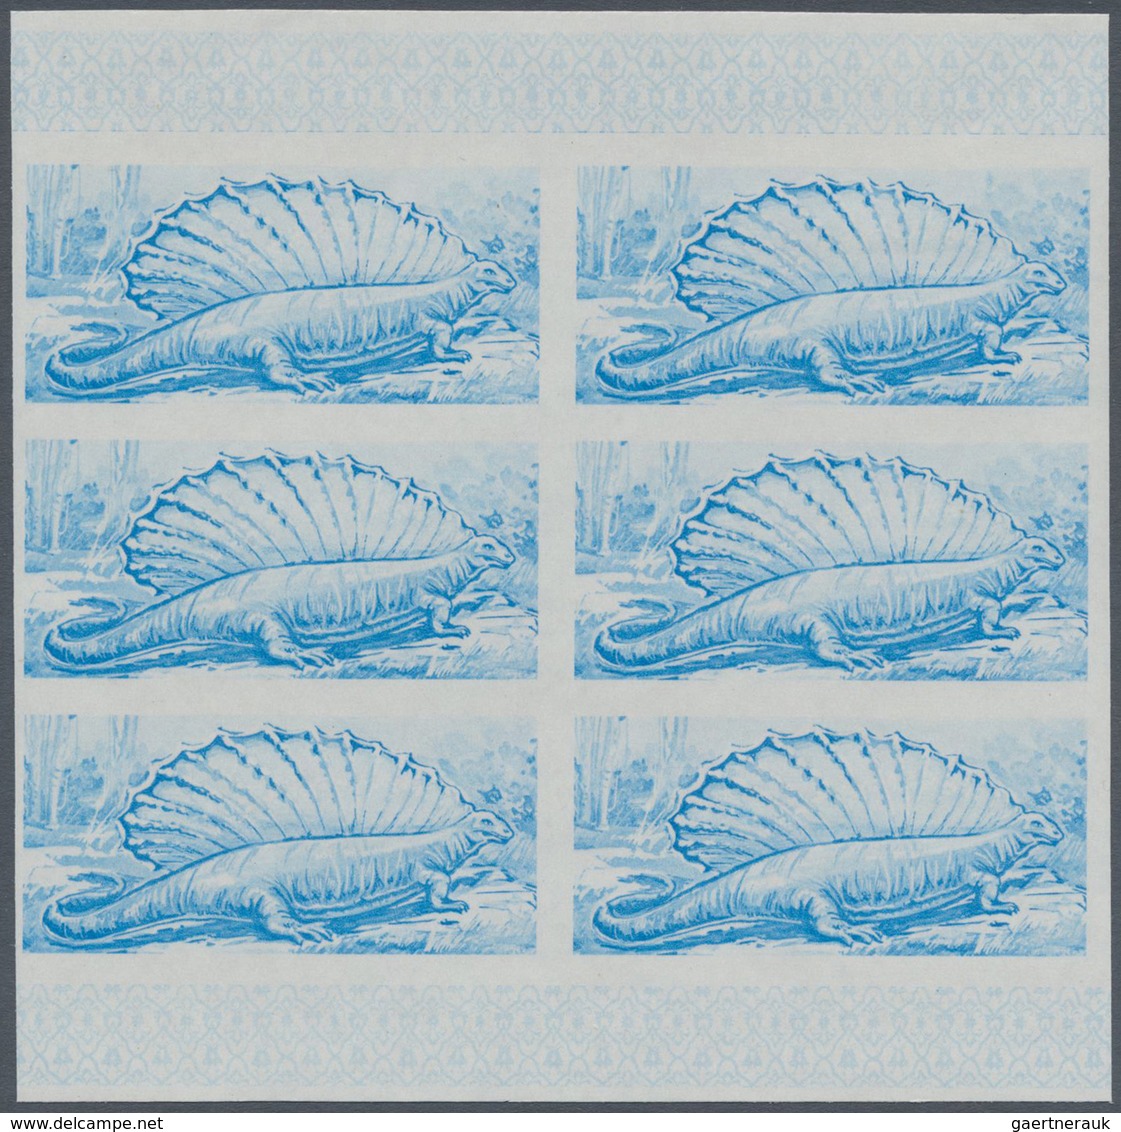 ** Thematik: Tiere-Dinosaurier / Animals-dinosaur: 1968, FUJEIRA: Prehistoric Animals 1r. Airmail Stamp - Préhistoriques